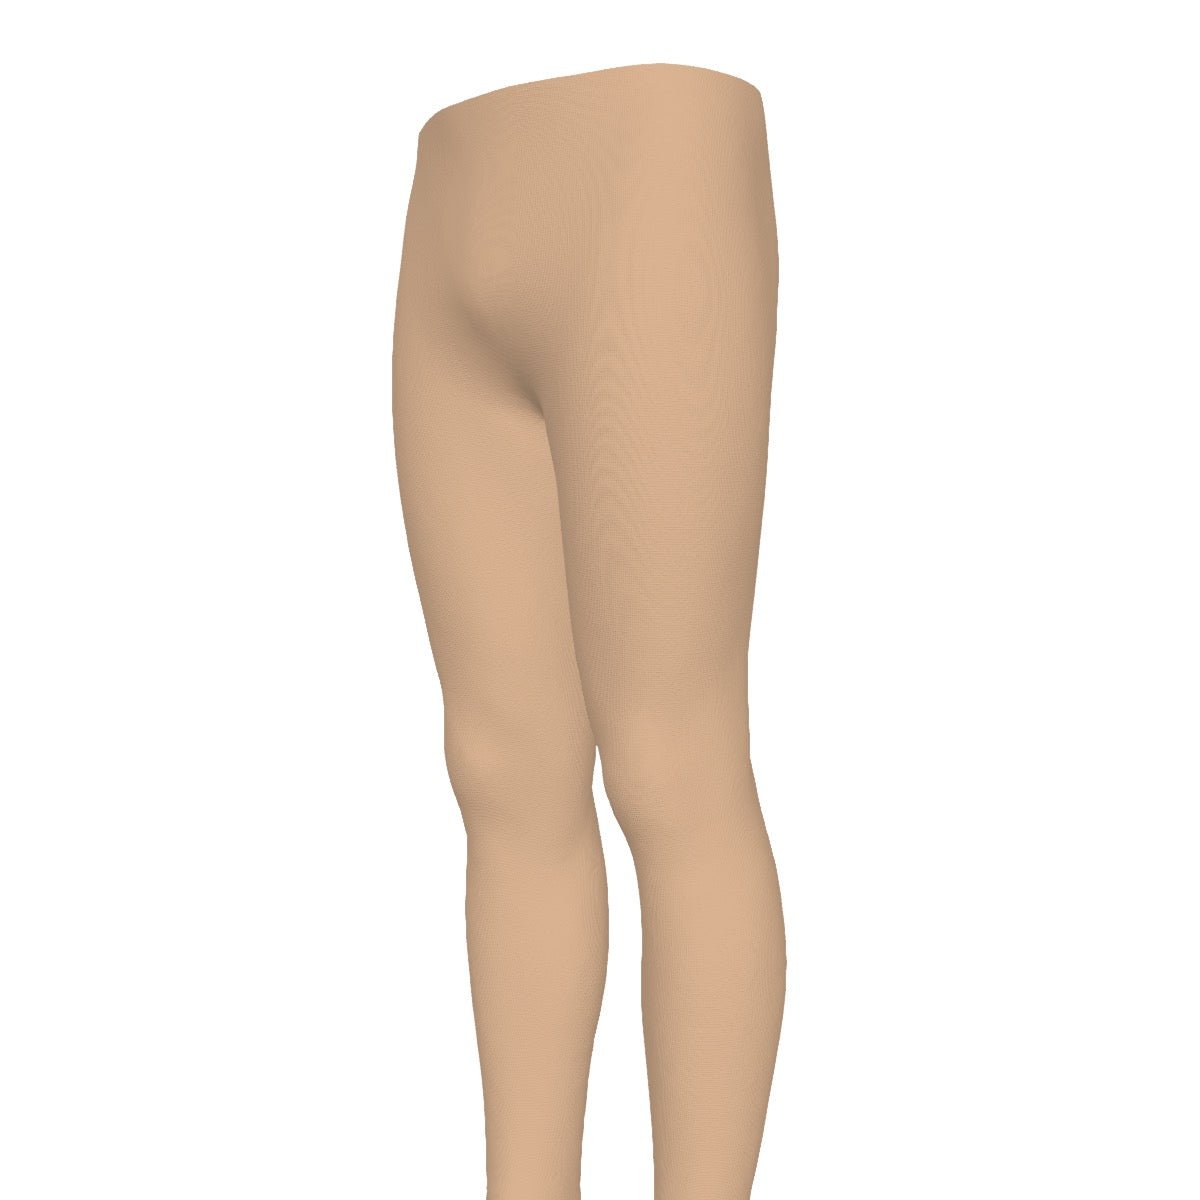 NUDETONE Caramel Beige Men's leggings | CANAANWEAR | Men's Leggings |